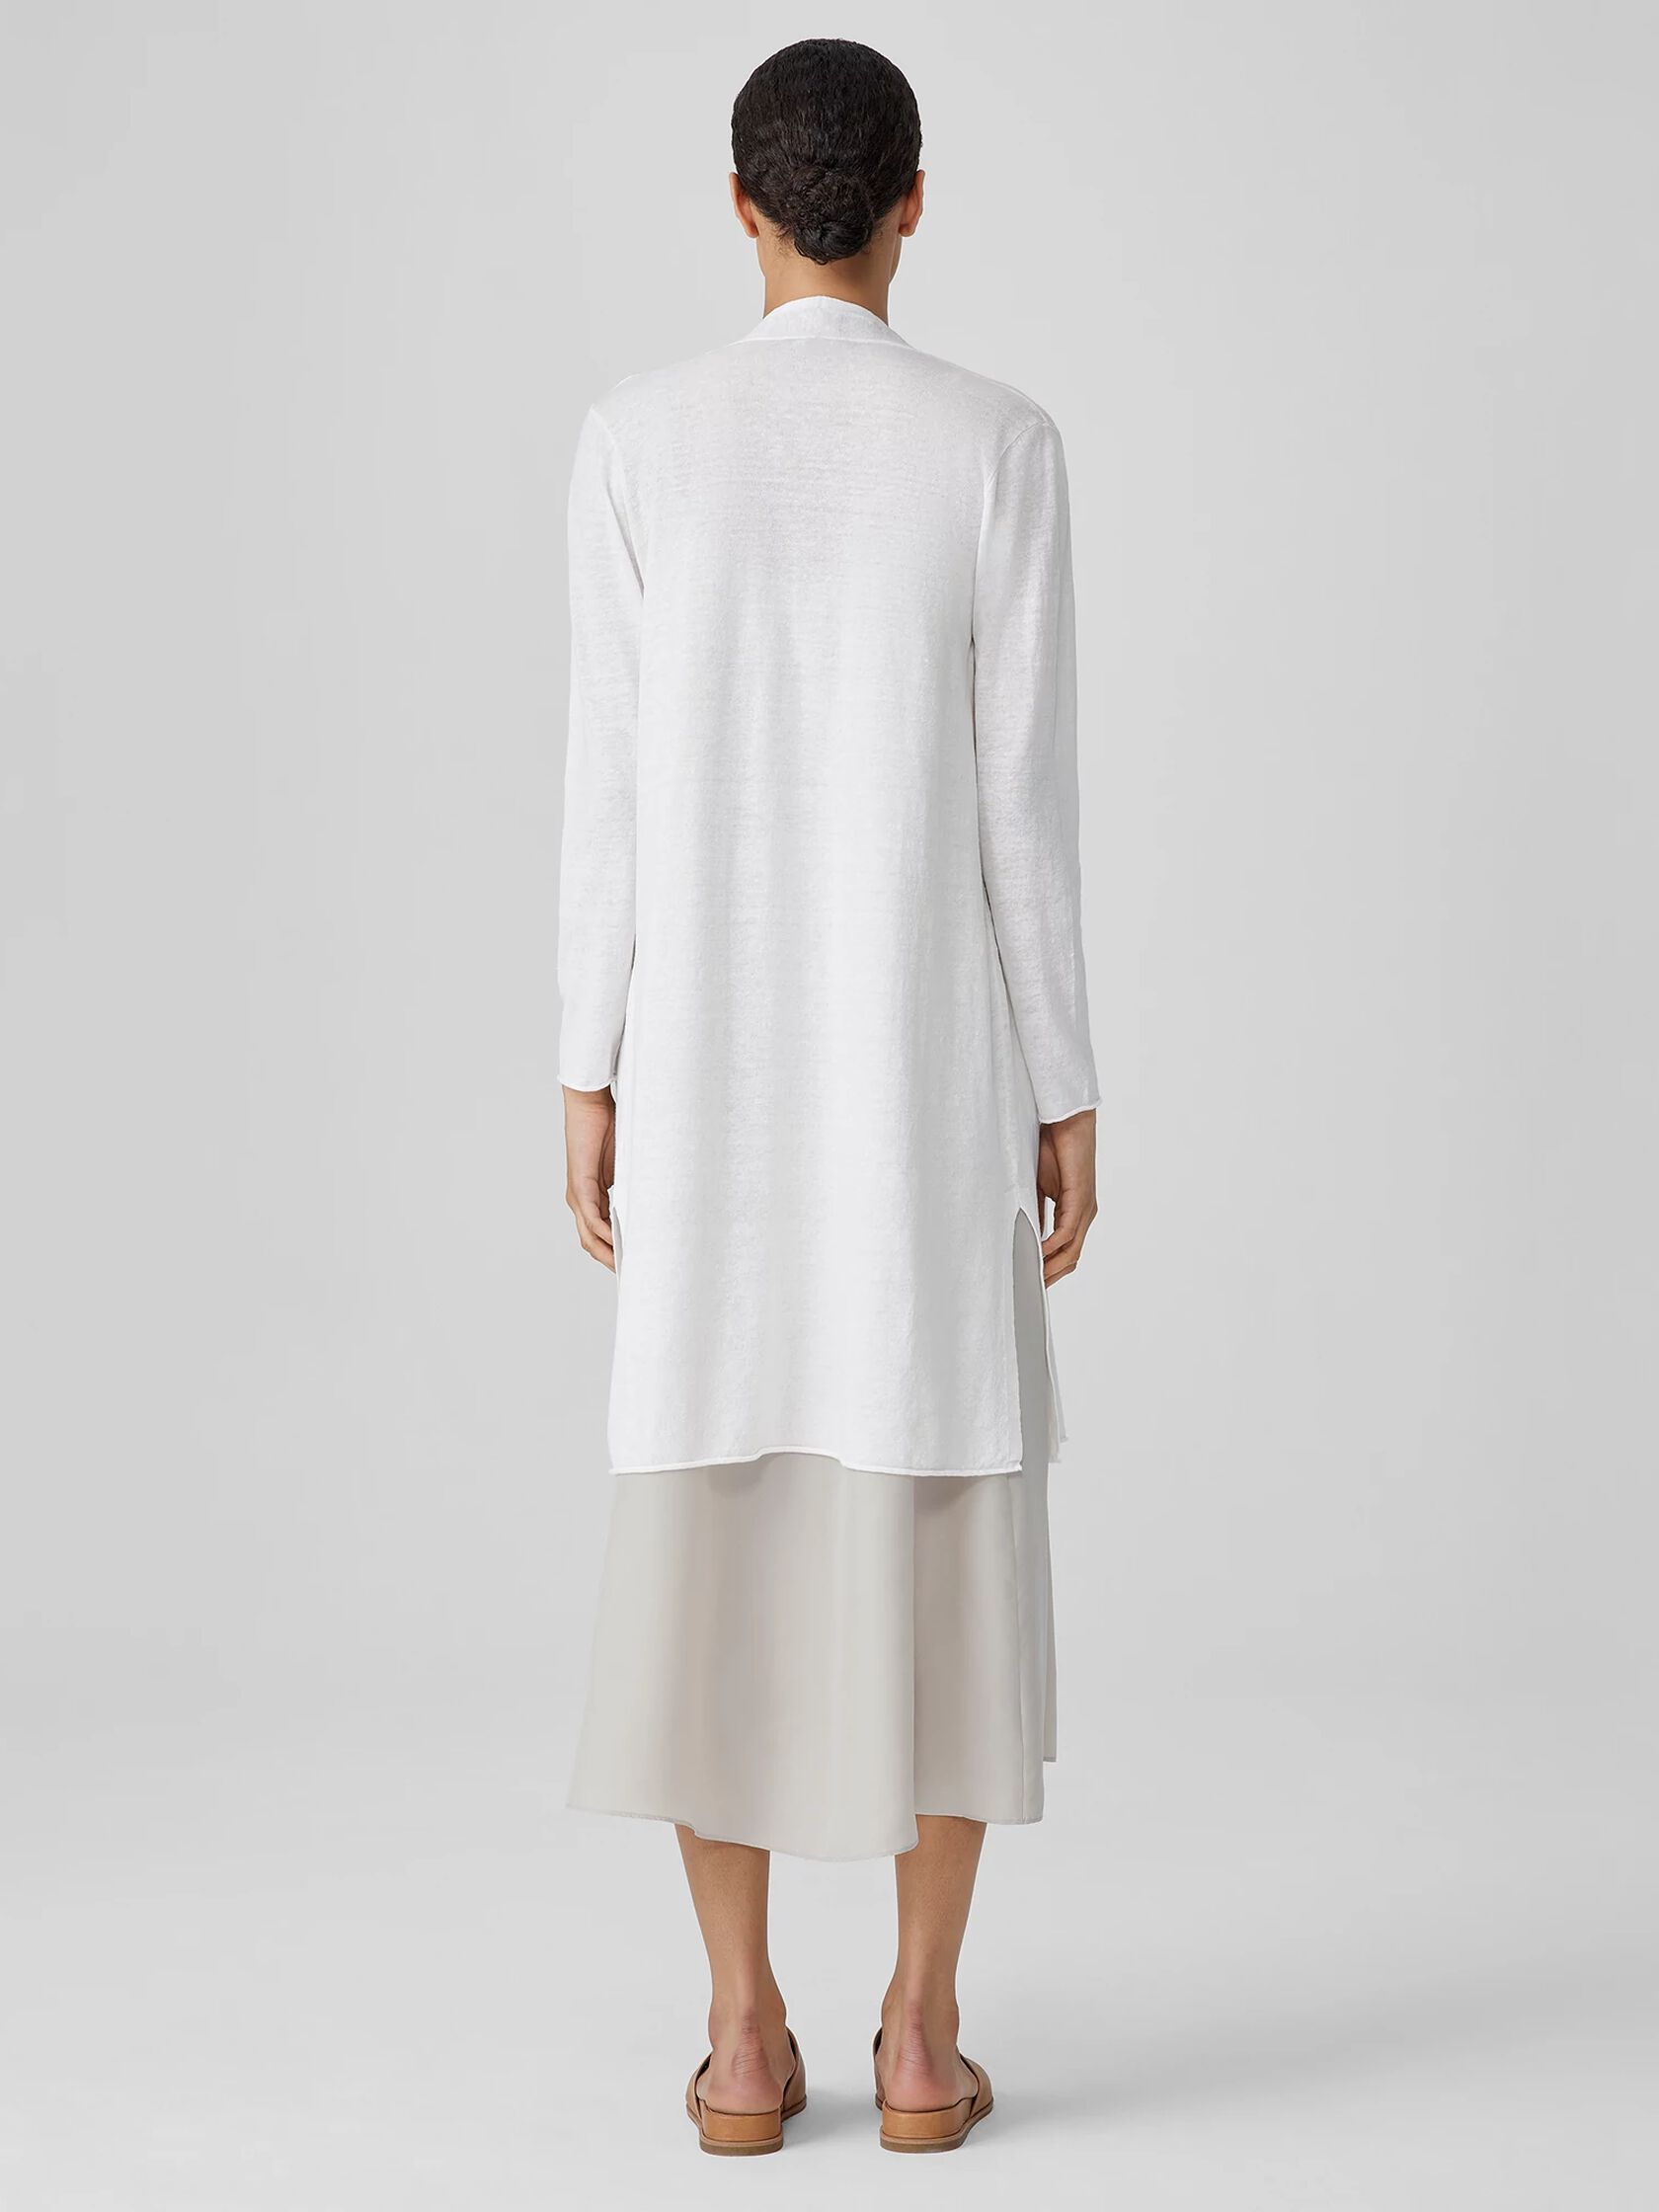 Organic Linen Cotton Long Cardigan